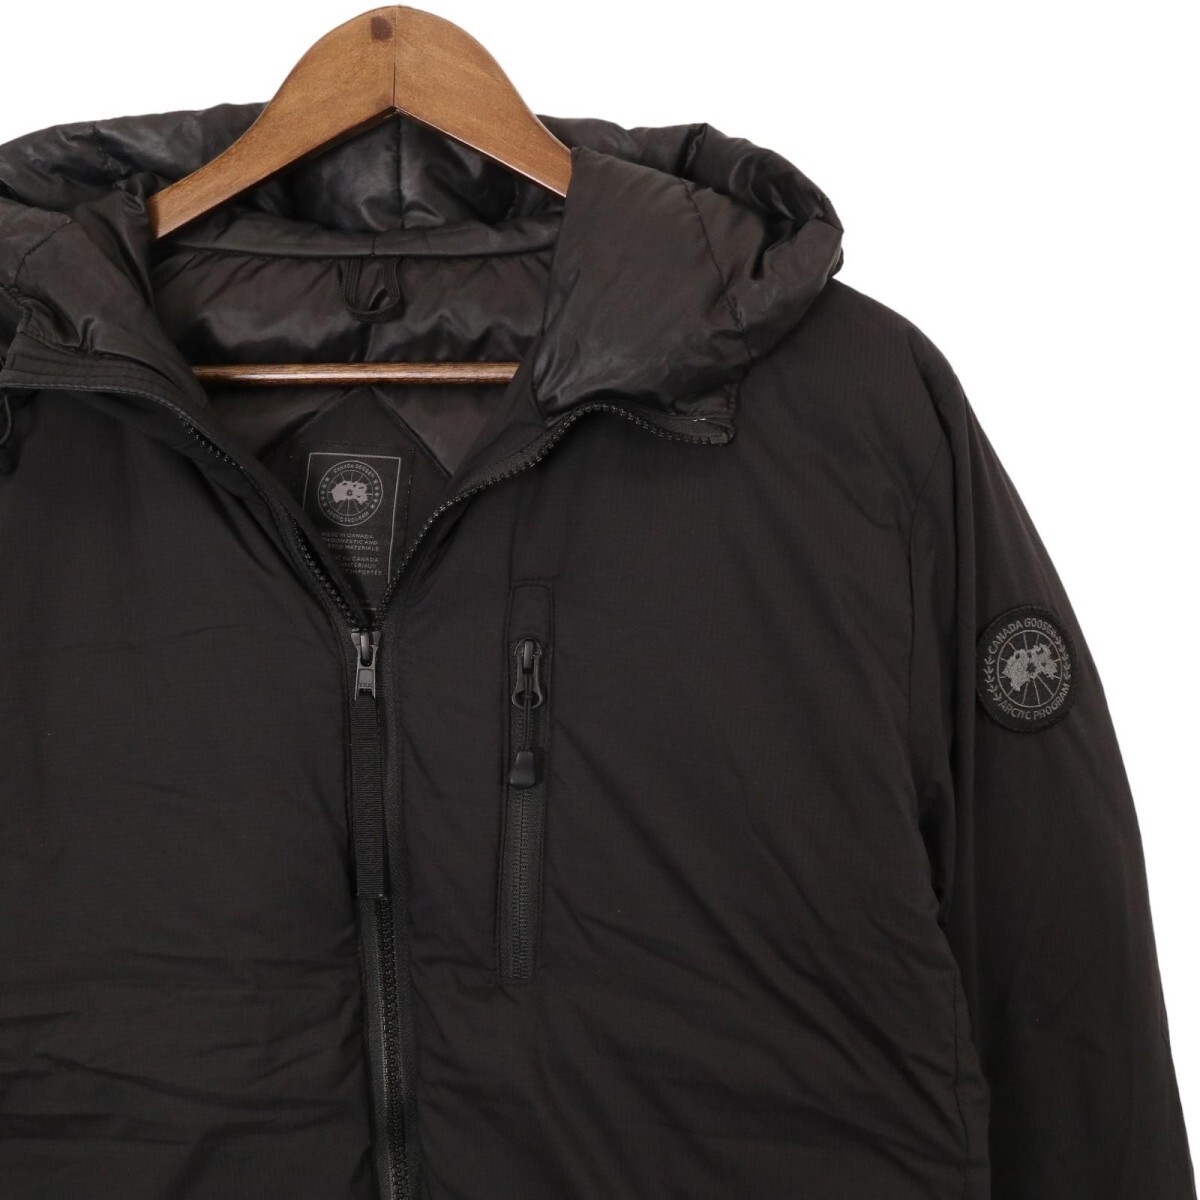 CANADA GOOSE / Black Label Lodge Hoody Canada Goose Black Label lodge f-ti down jacket 5078MB declared size M